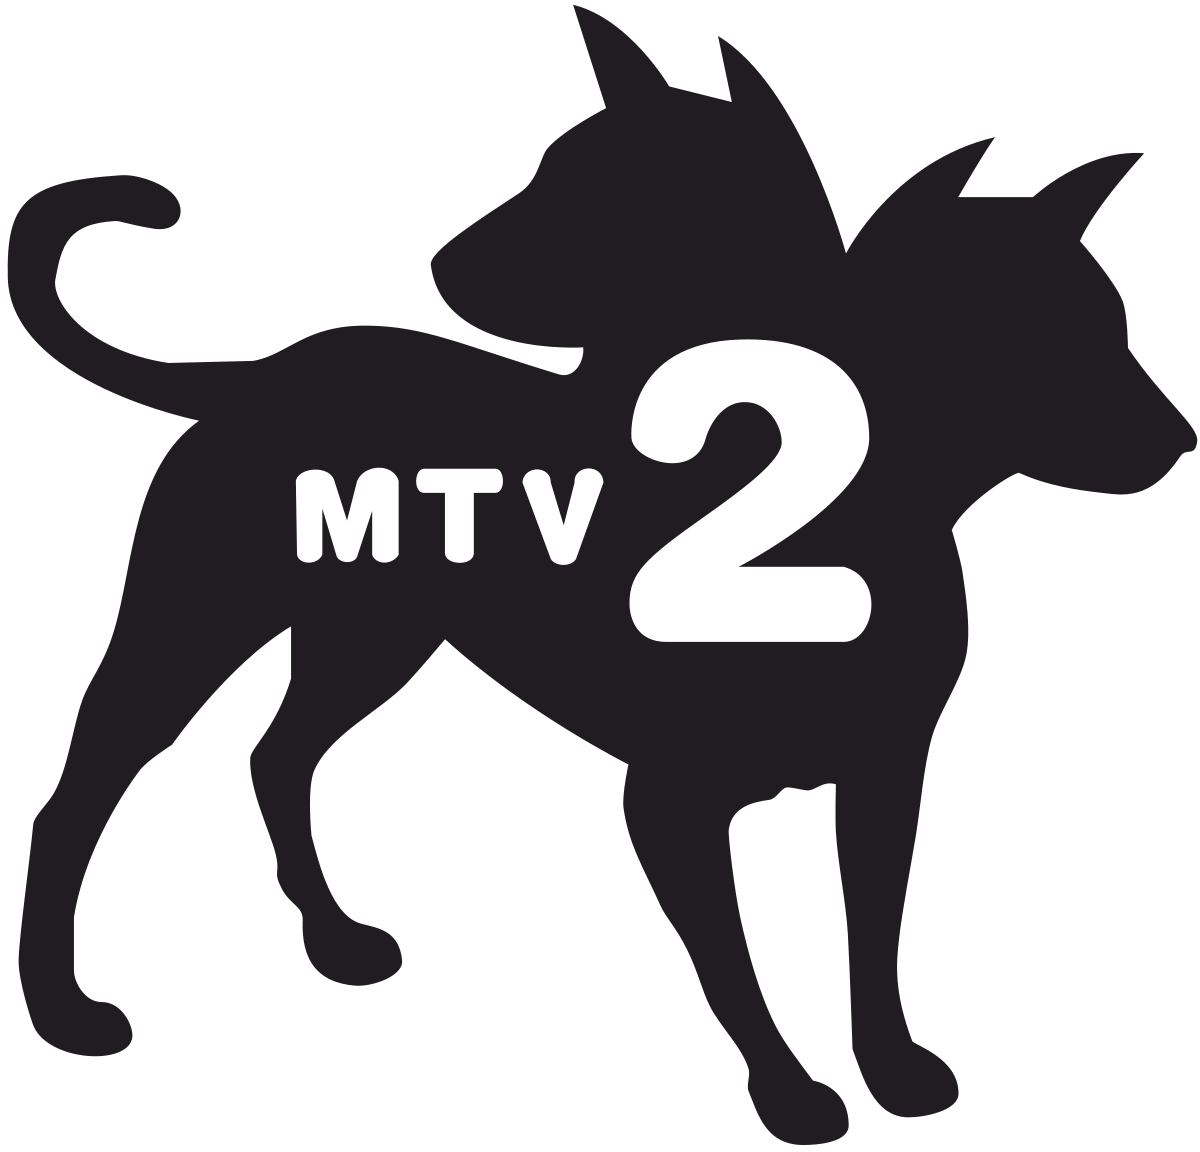 MTV 2